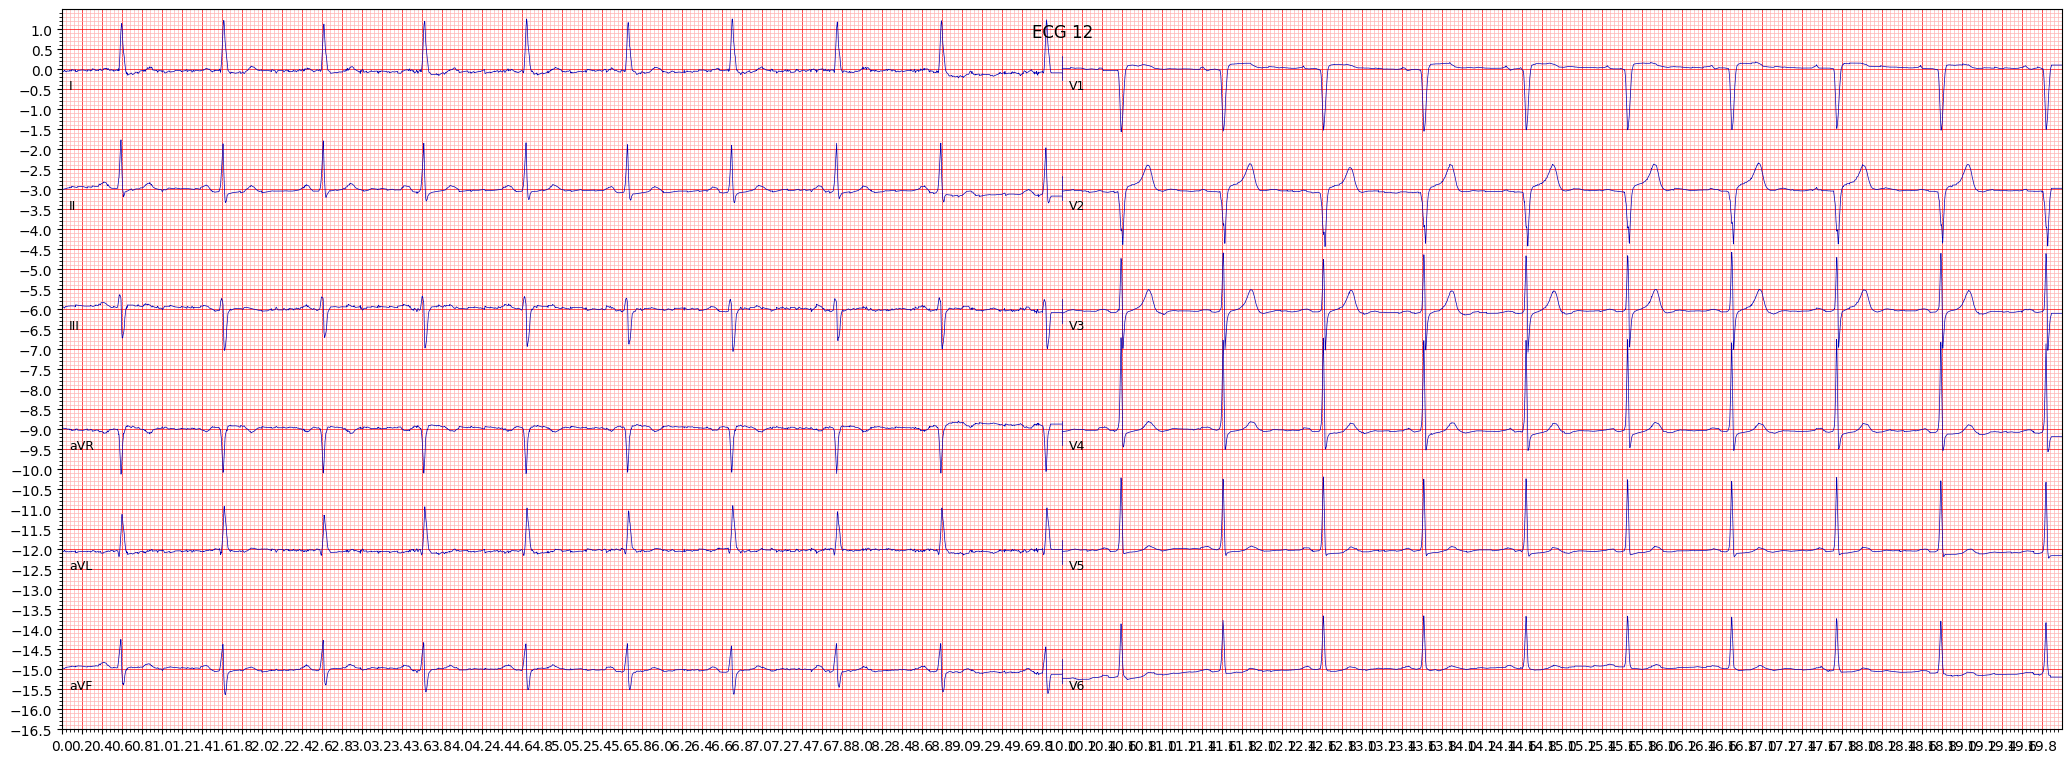 anterior myocardial infarction (AMI) example 16704